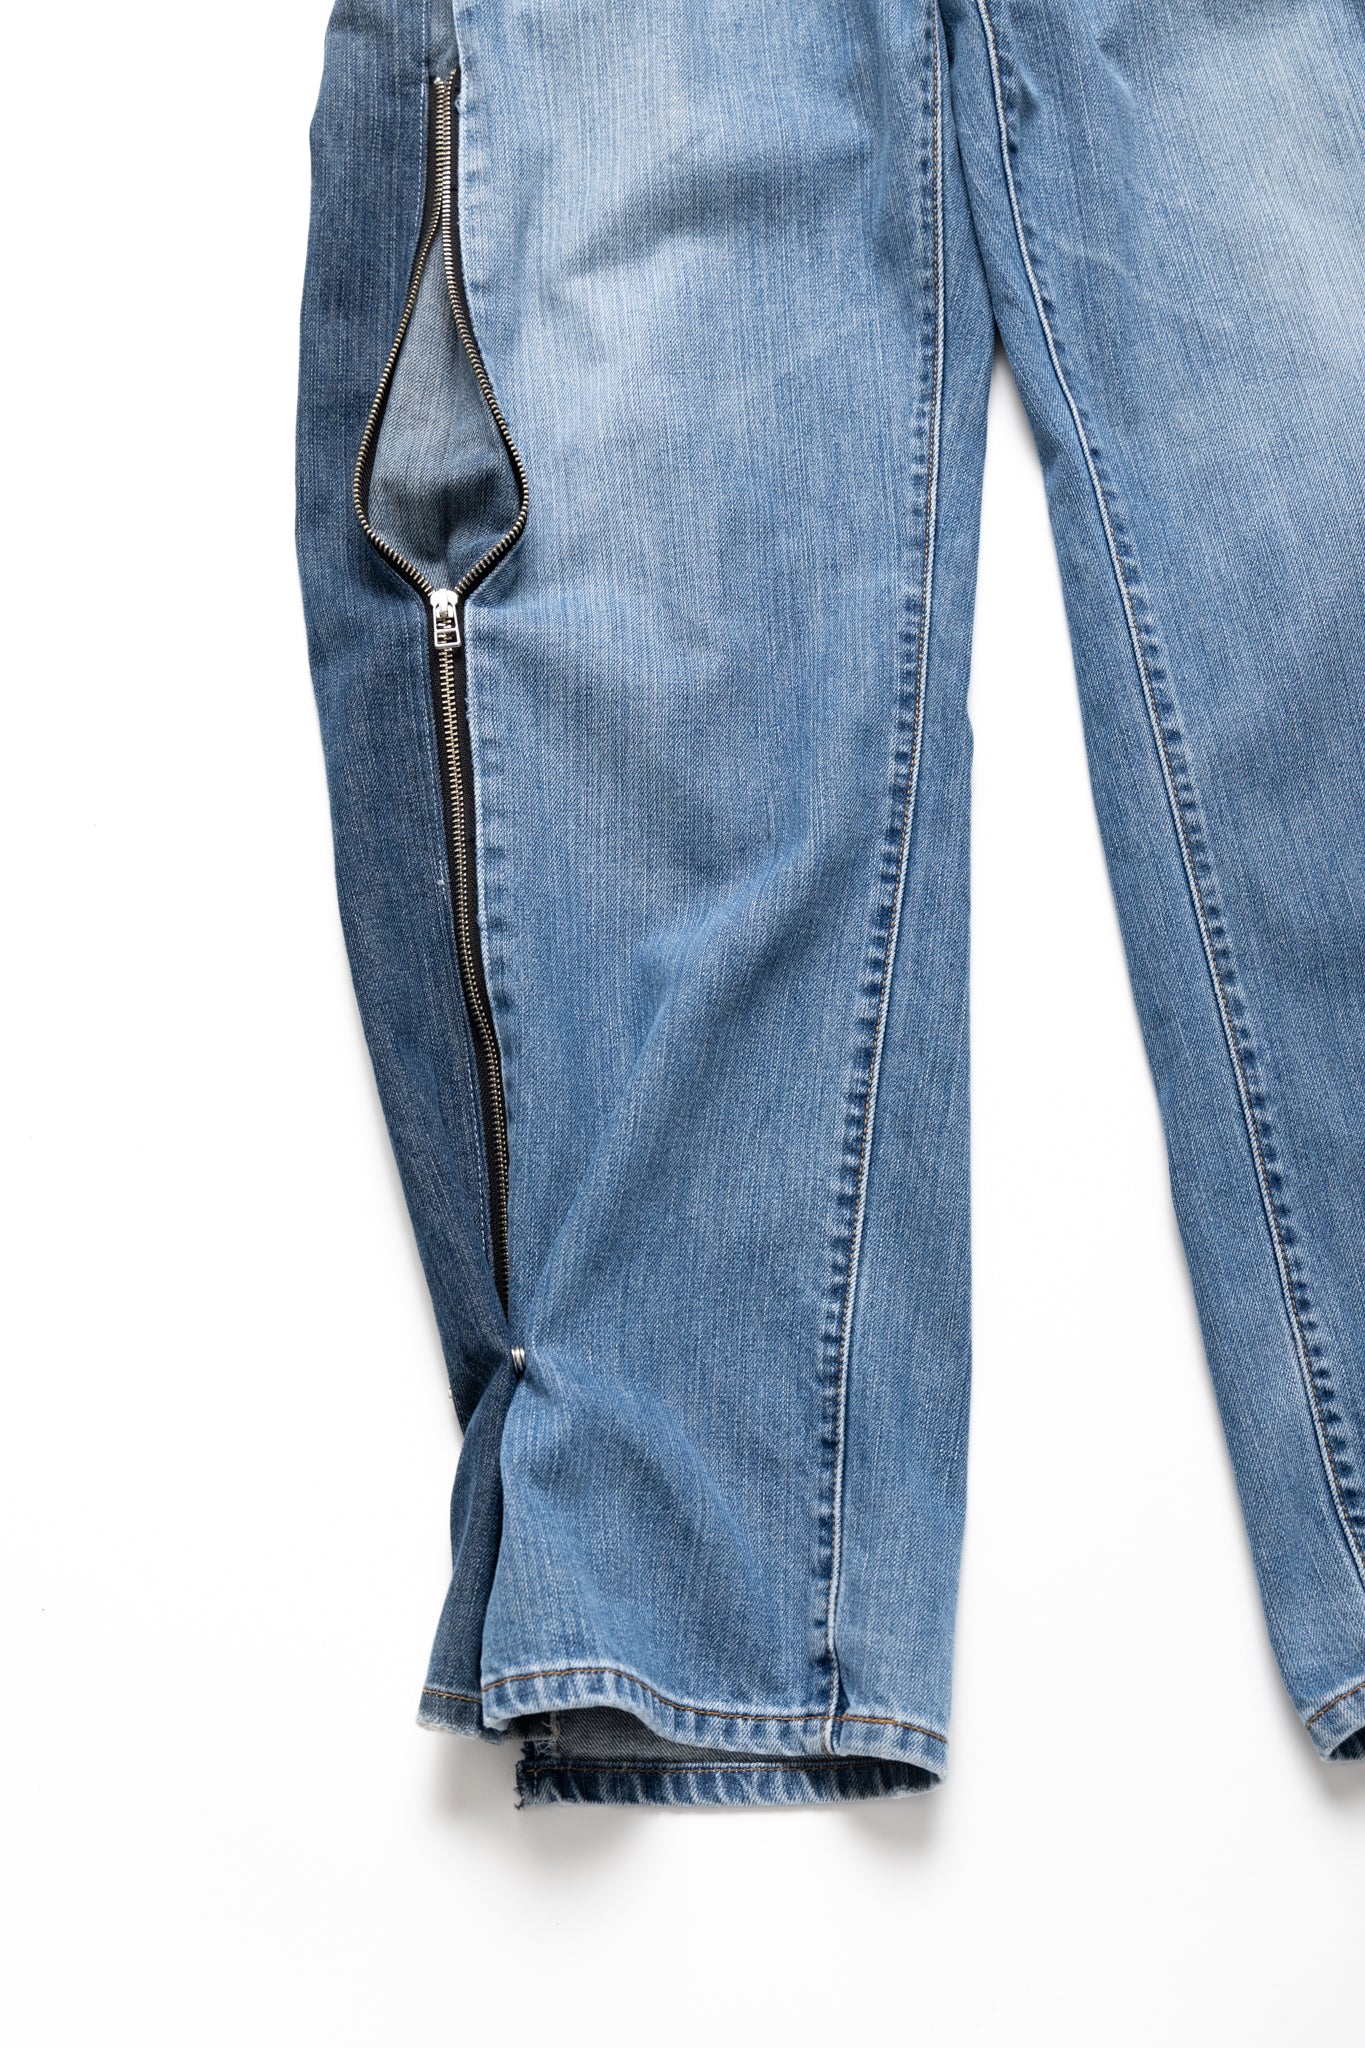 Zip Baggy Jeans Blue - S (2)